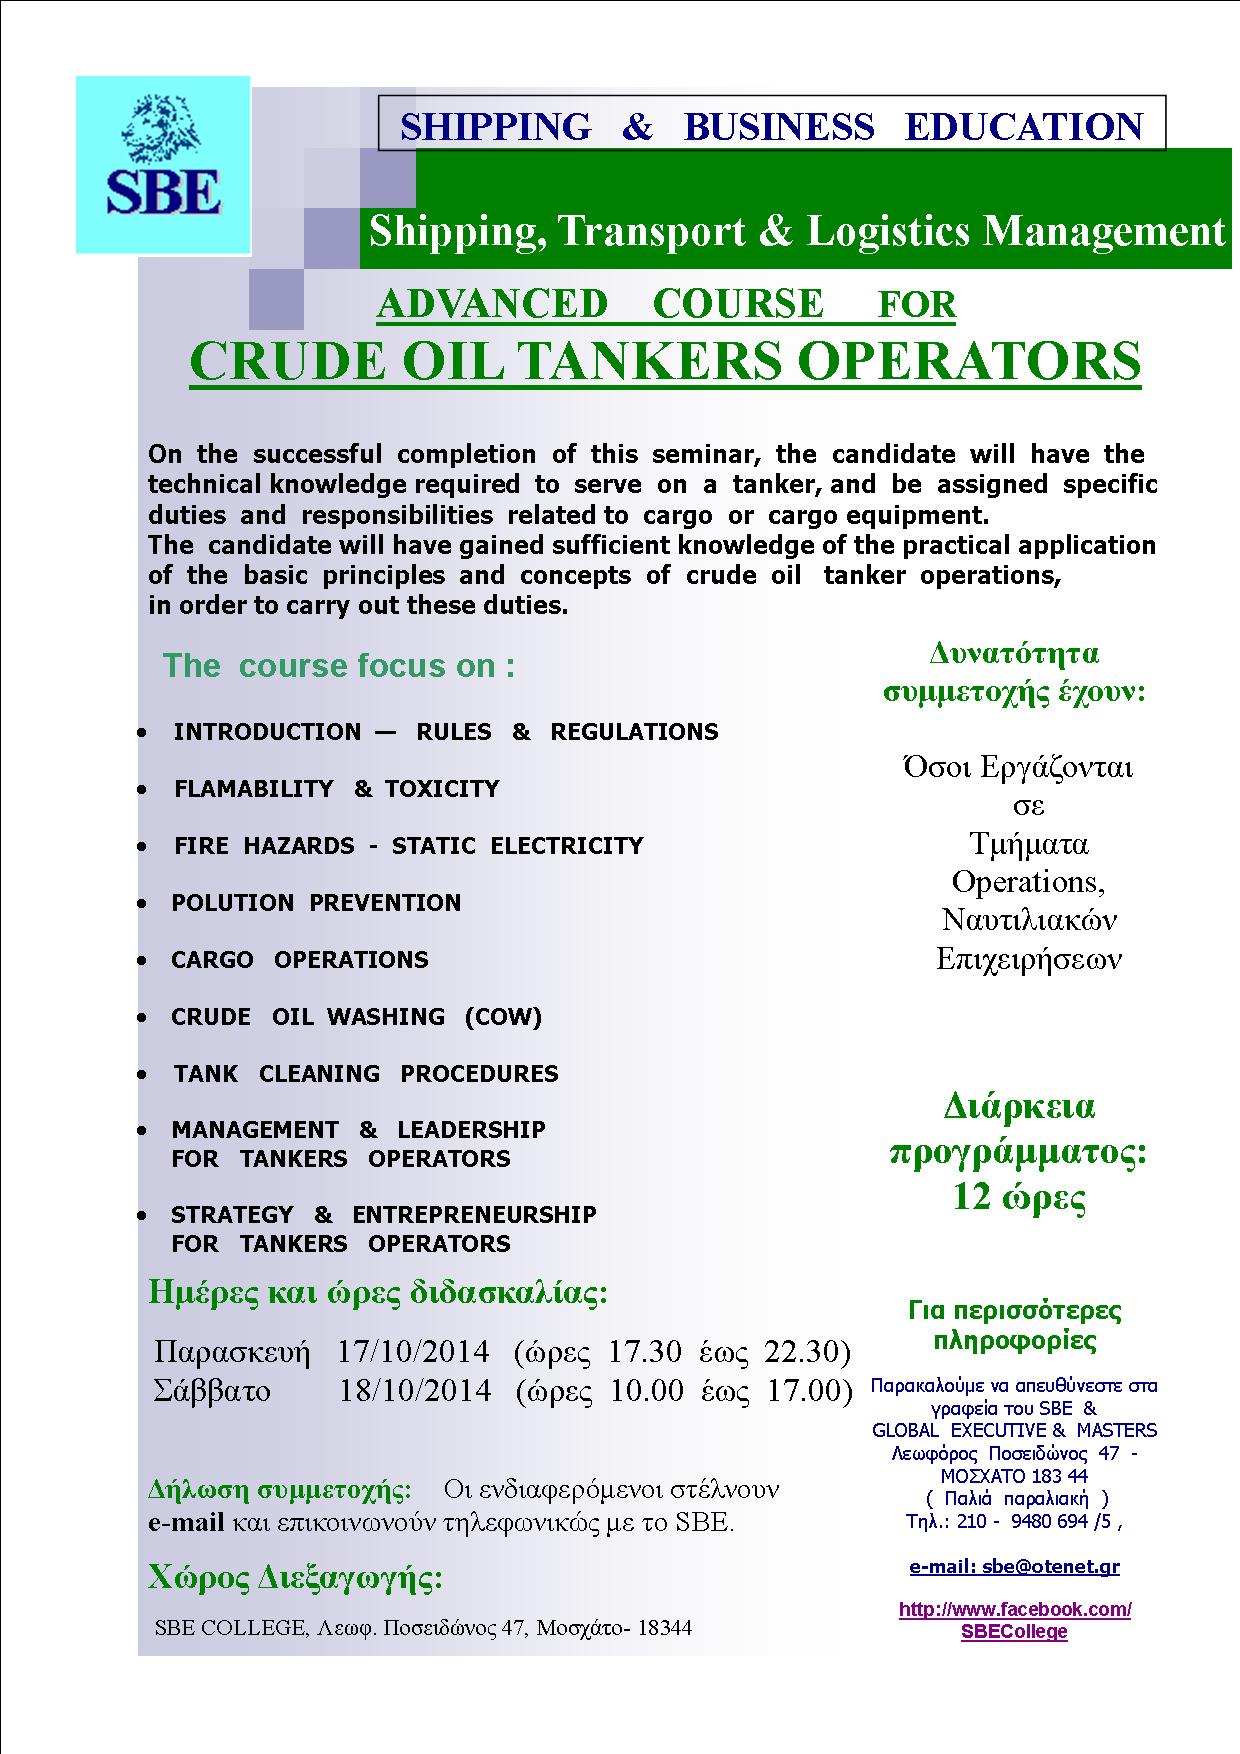 SBE – ADVANCED COURSE FOR CRUDE OIL TANKERS OPERATORS